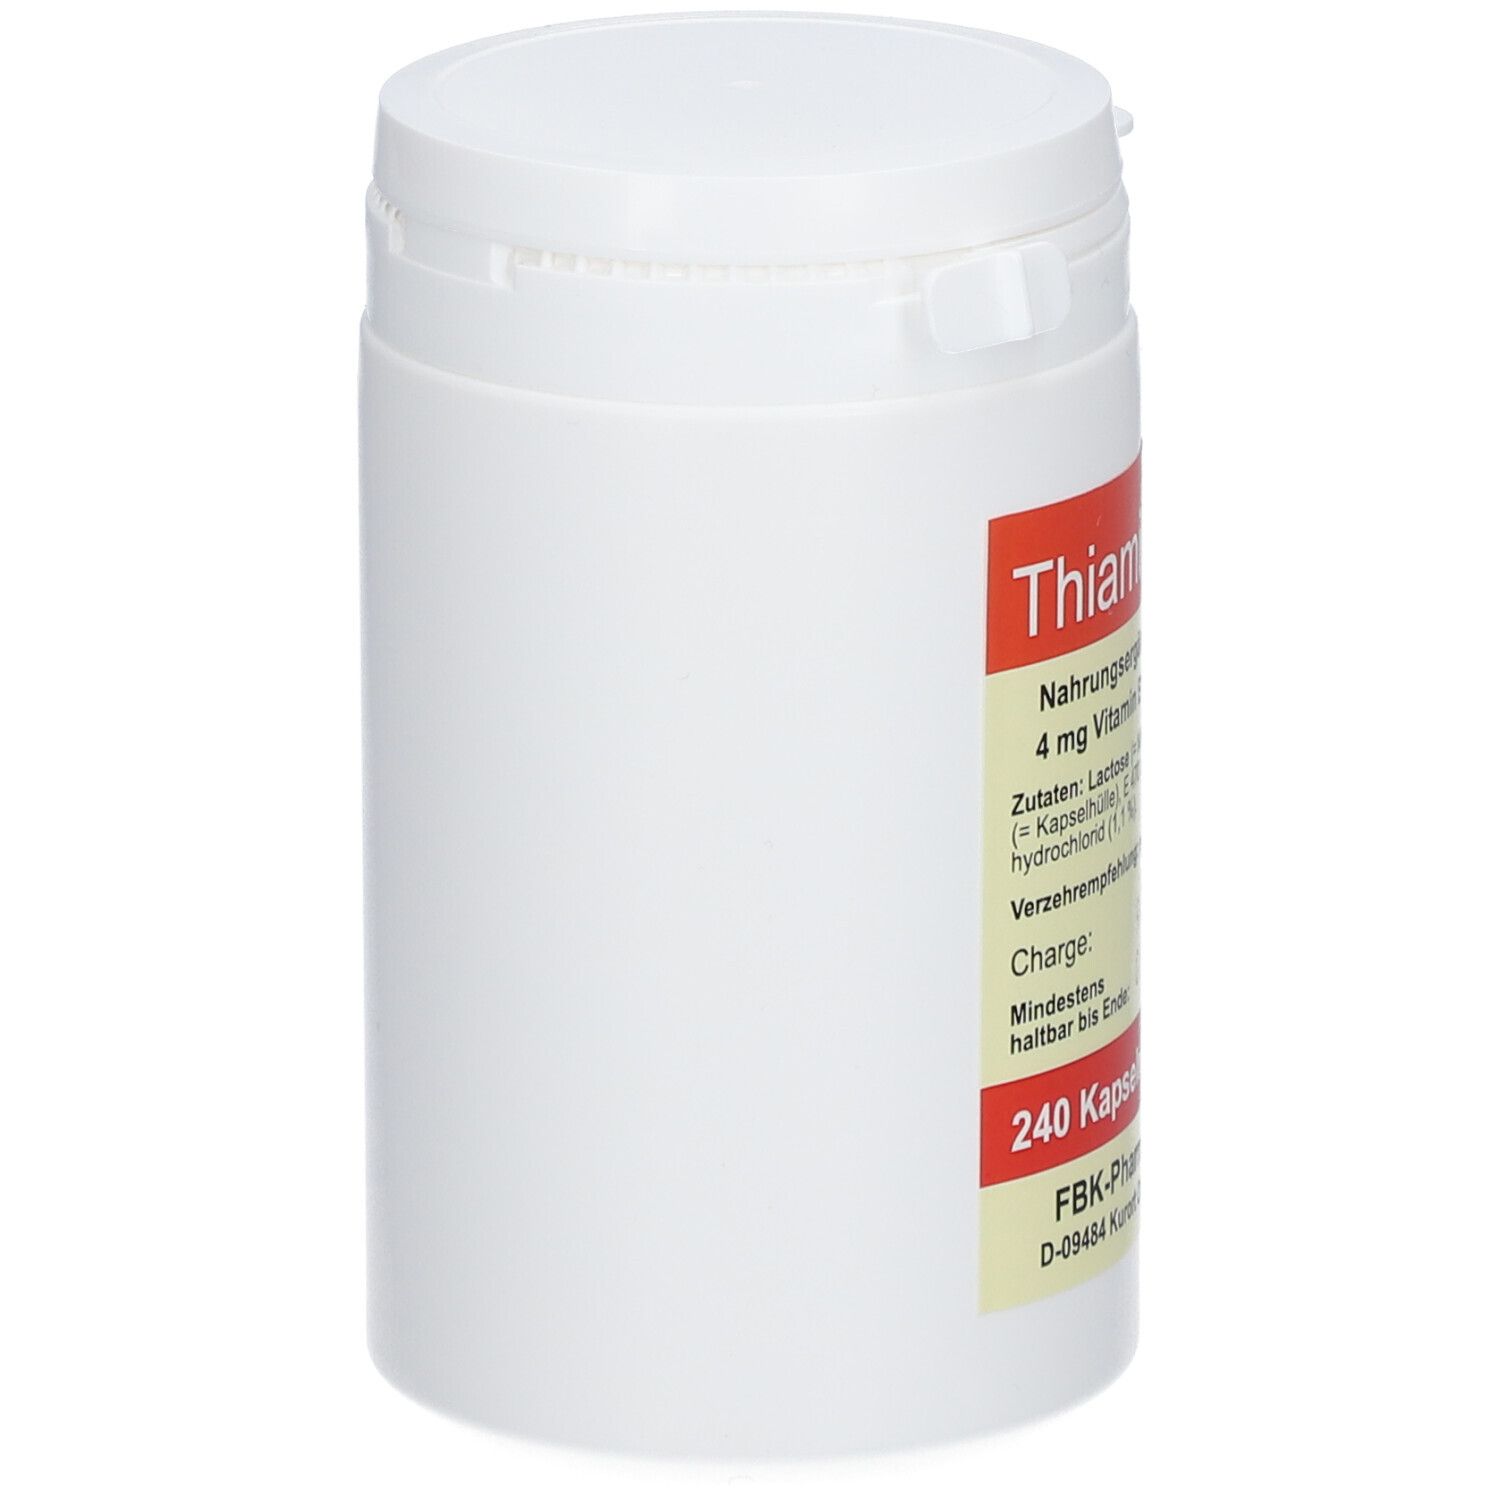 Thiamin-Vitamin B1